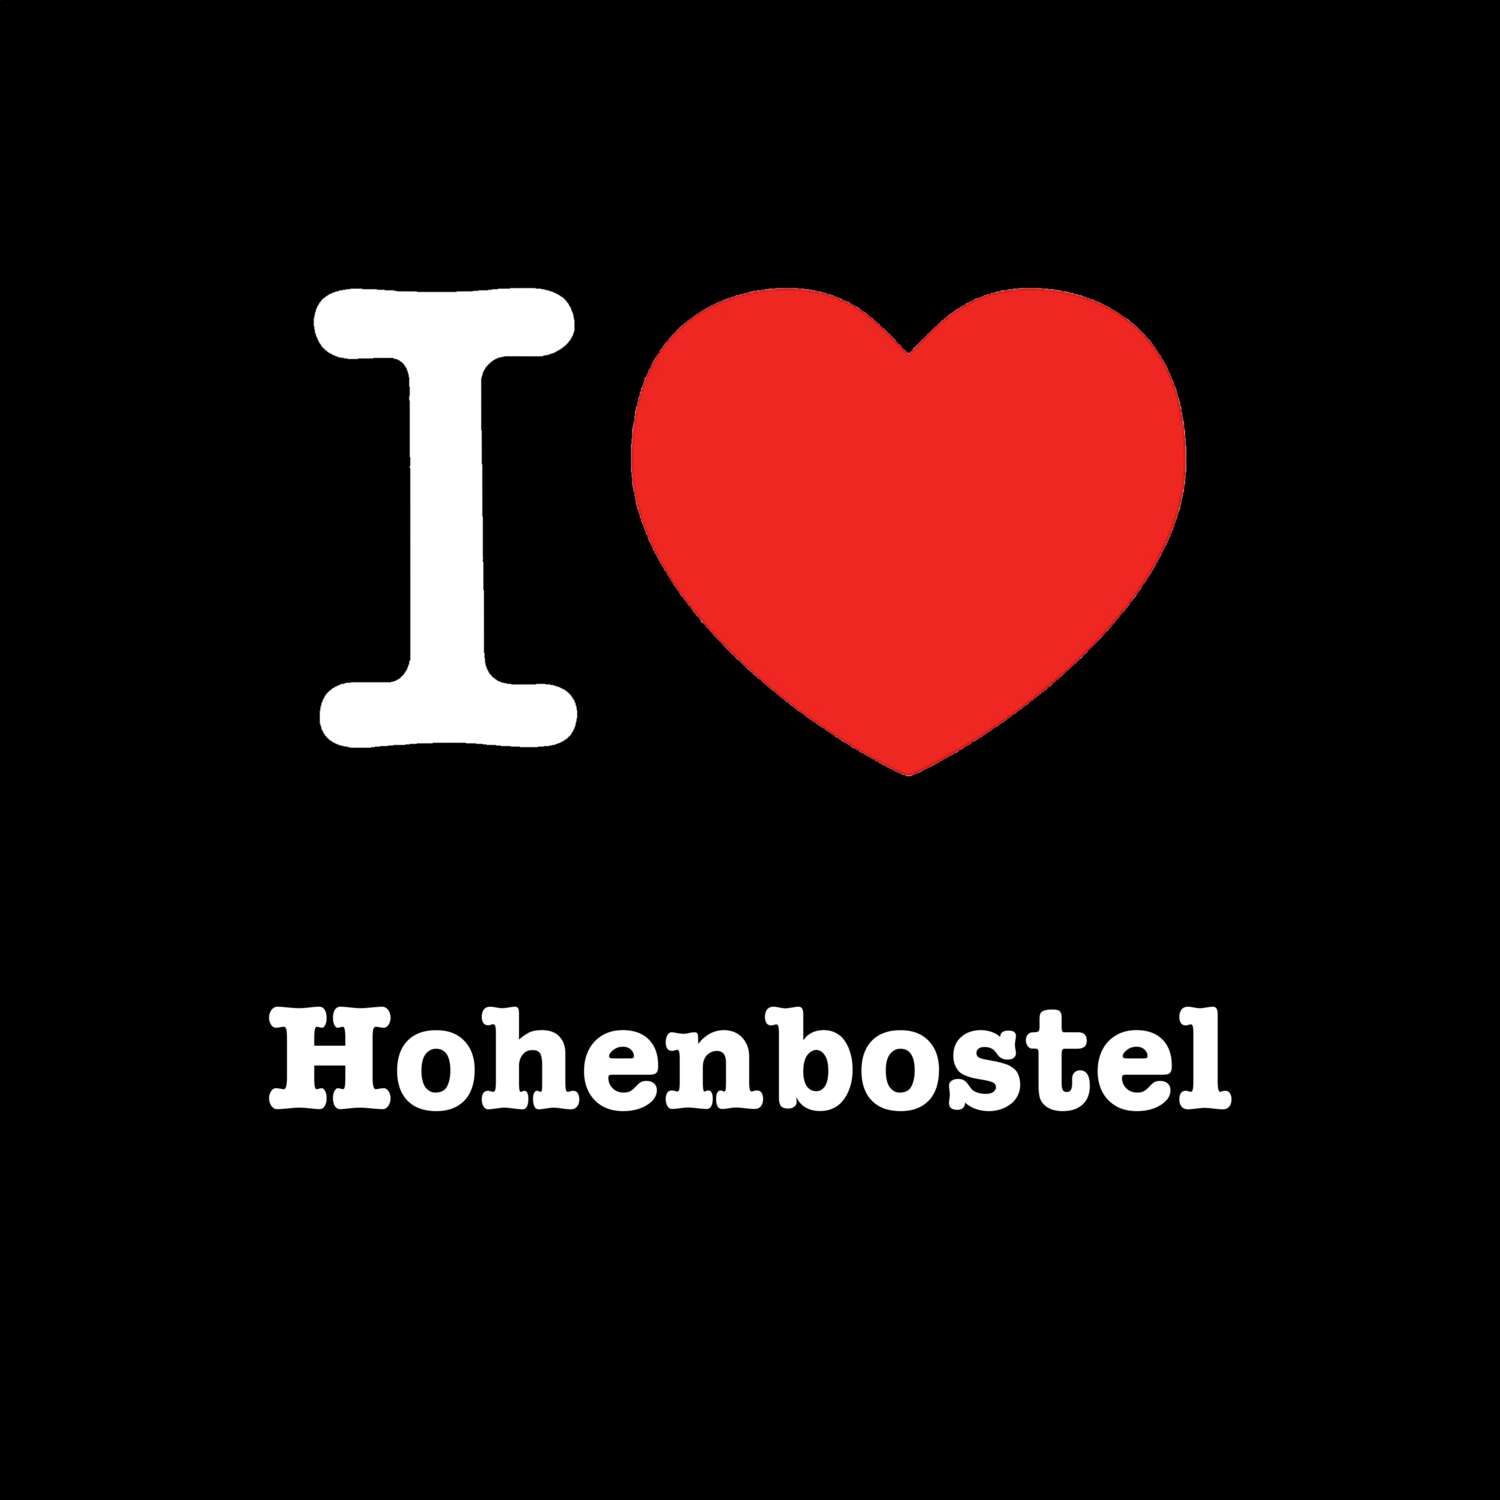 Hohenbostel T-Shirt »I love«